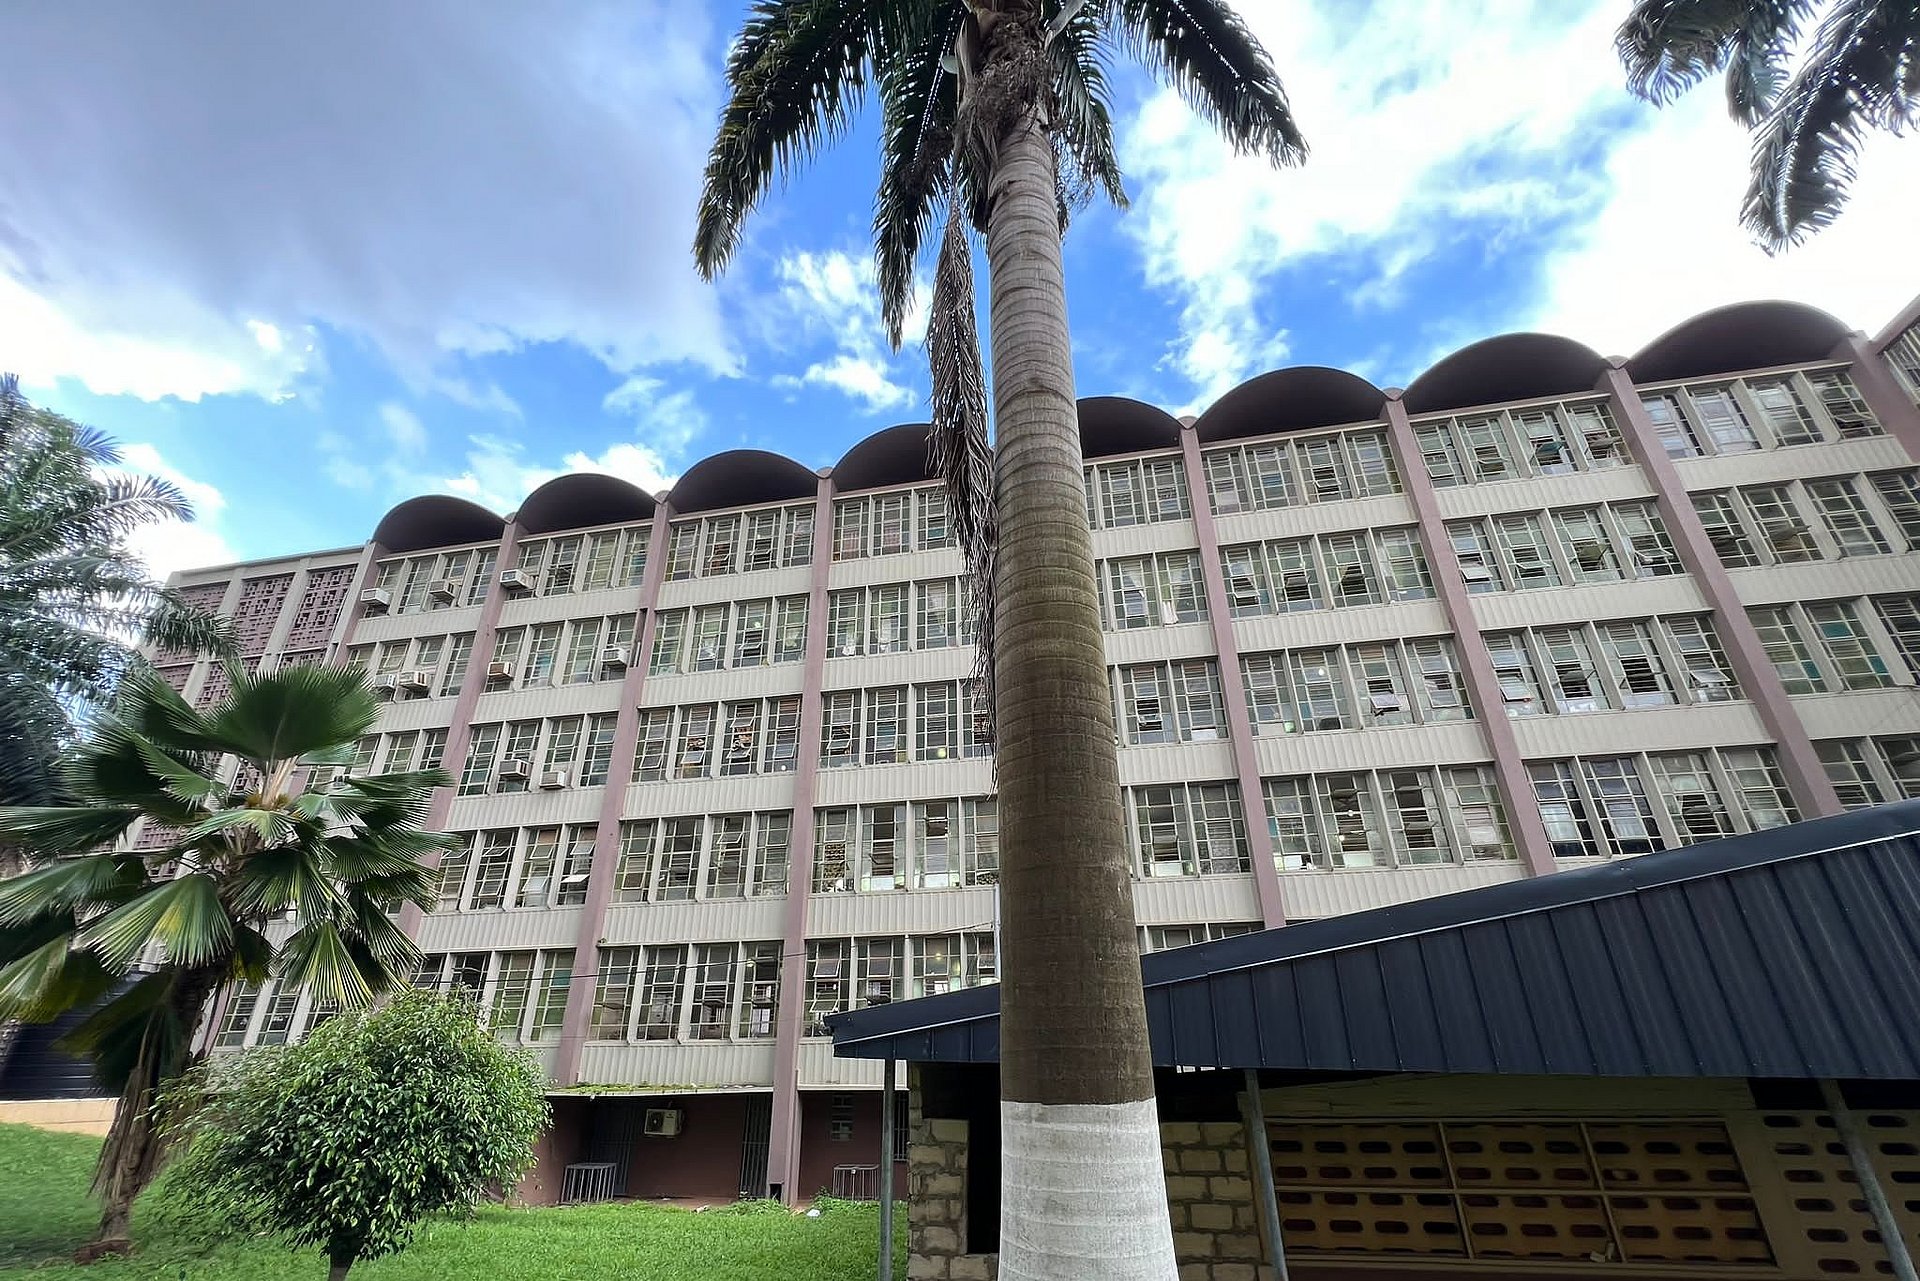 The Komfo Anokye Teaching Hospital (KATH) in Kumasi from the outside